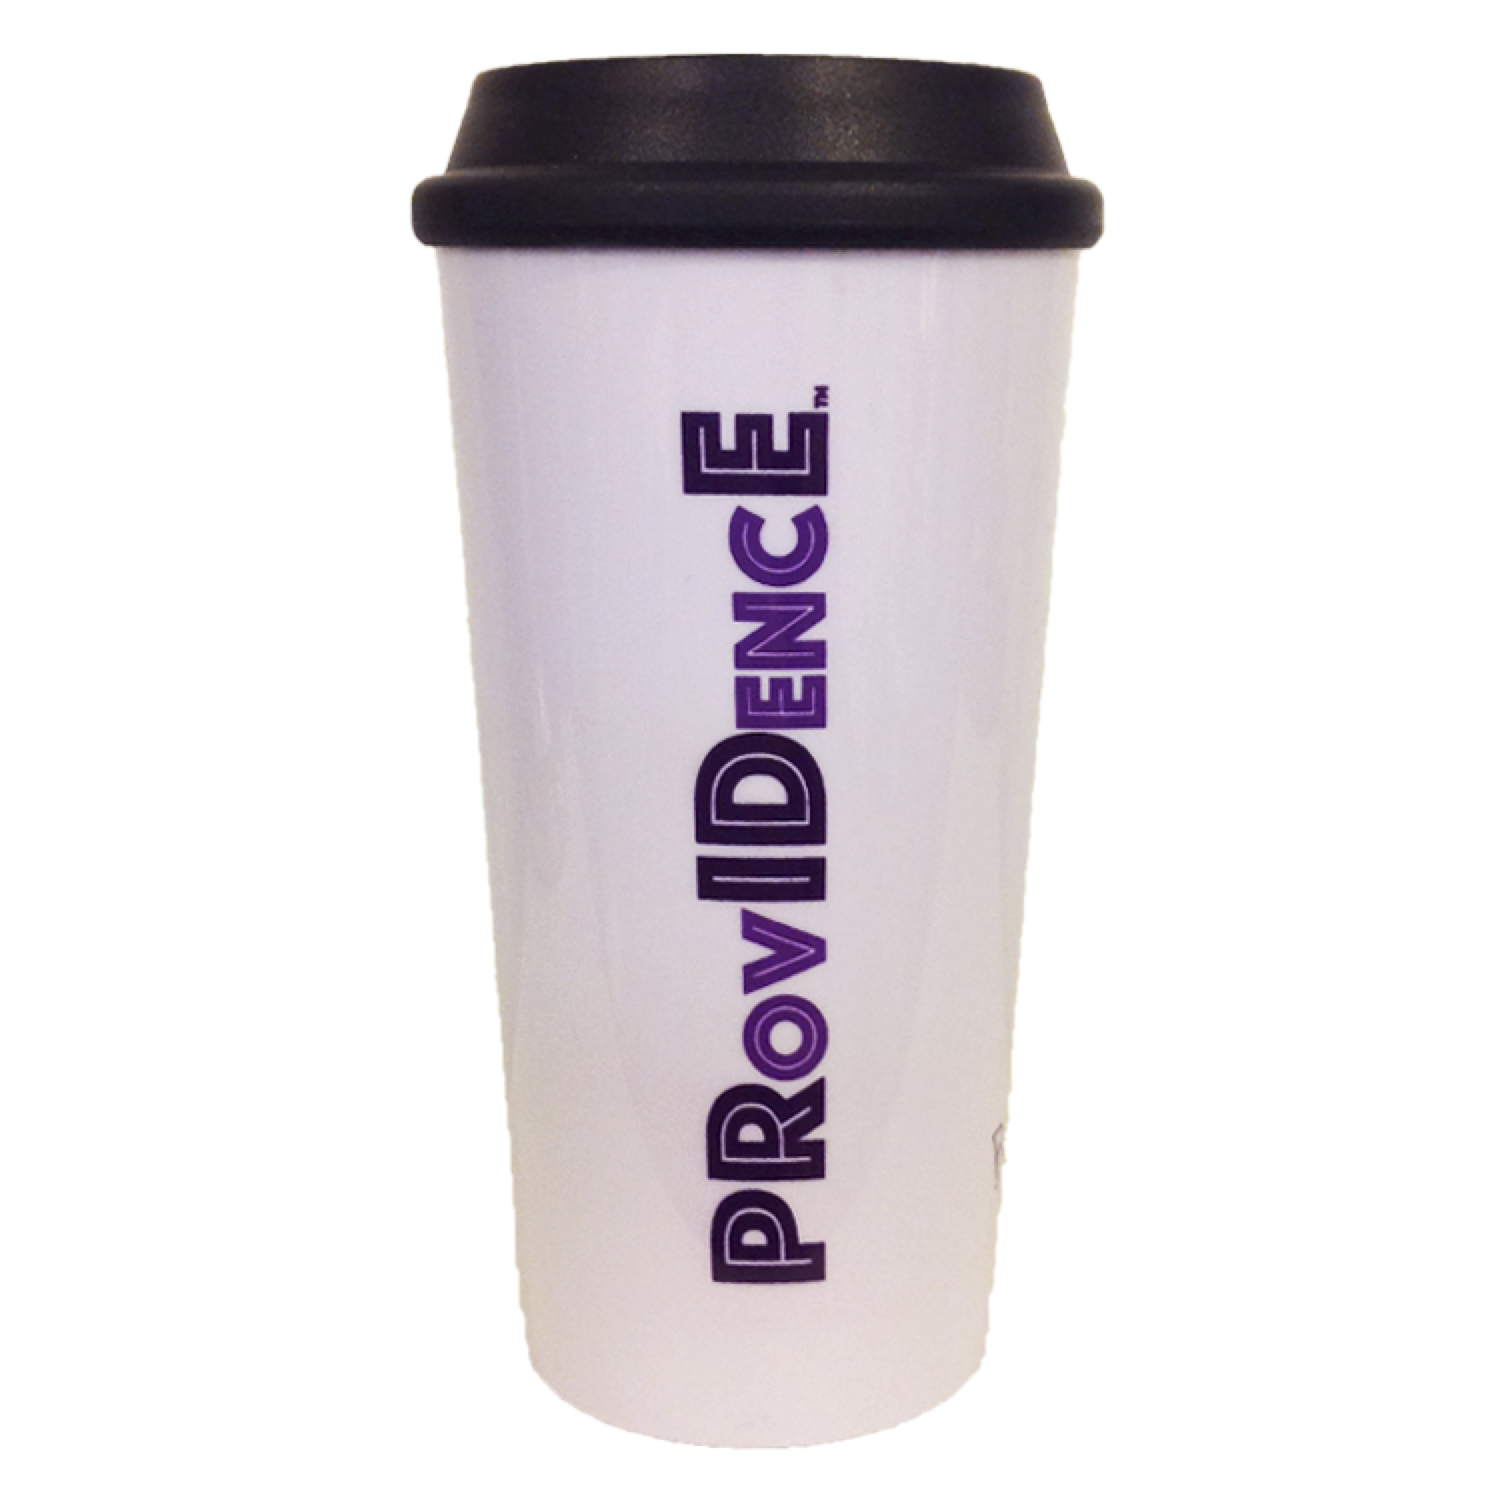 PRovIDencE travel mug